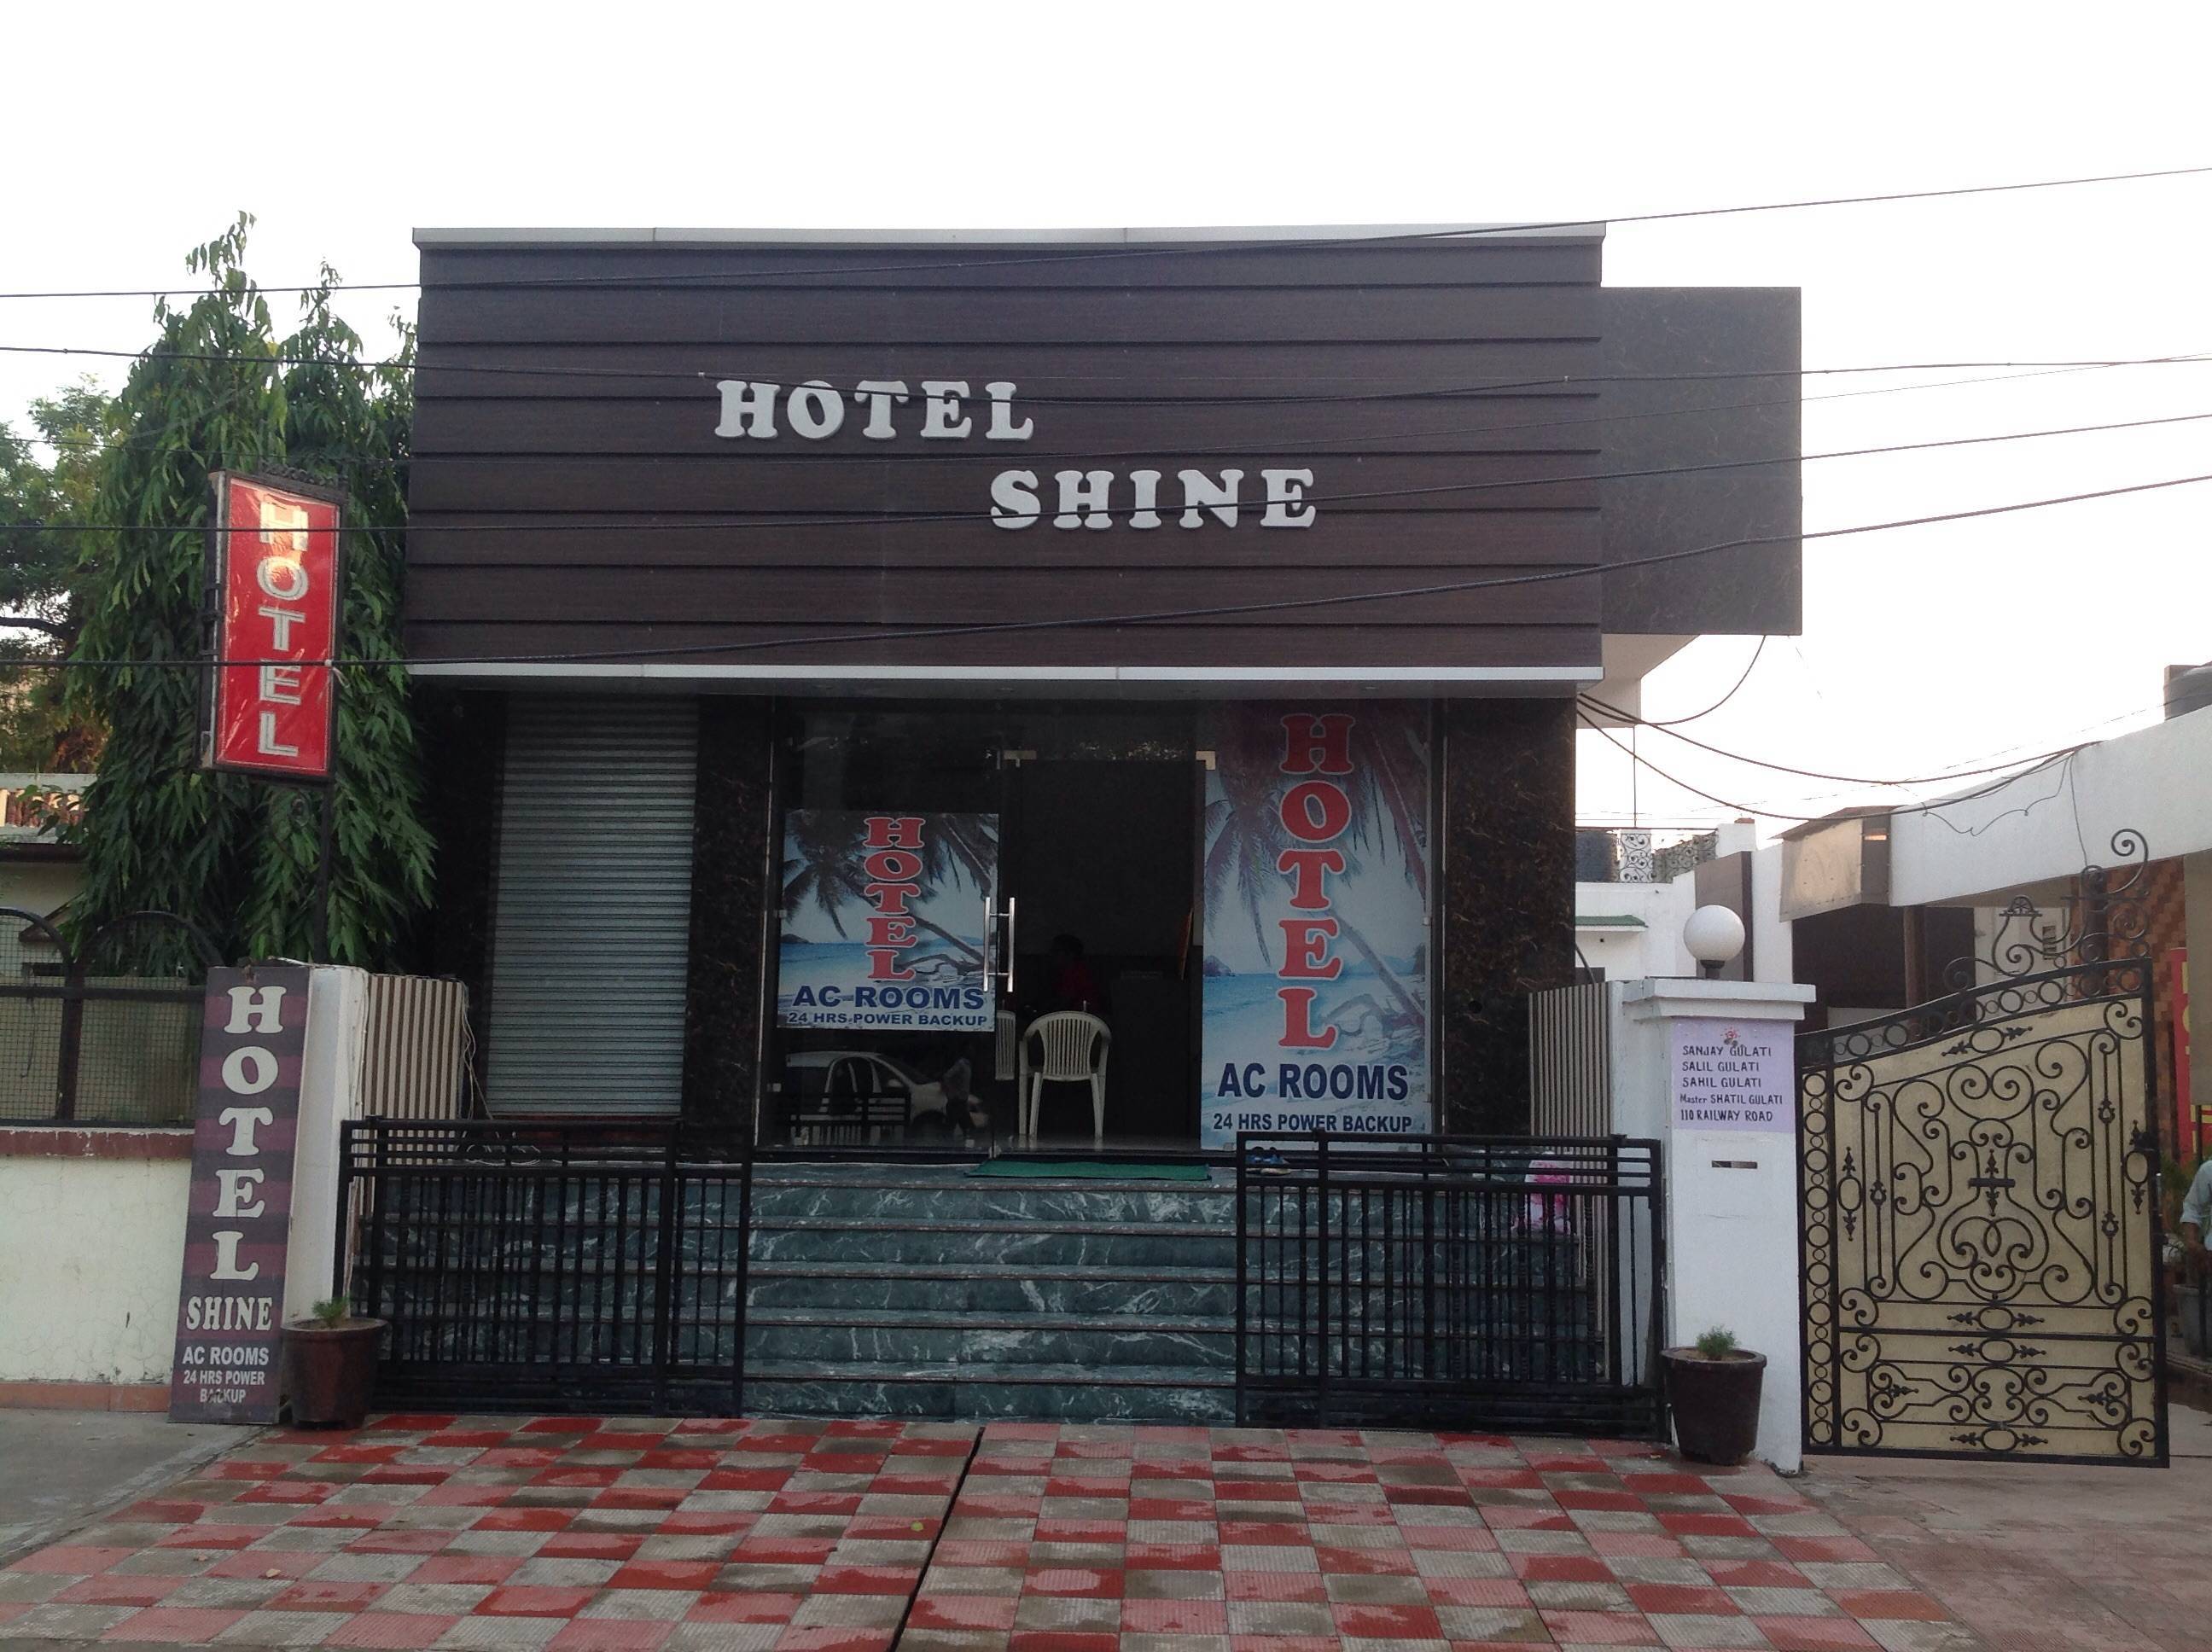 Hotel Shine|Guest House|Accomodation